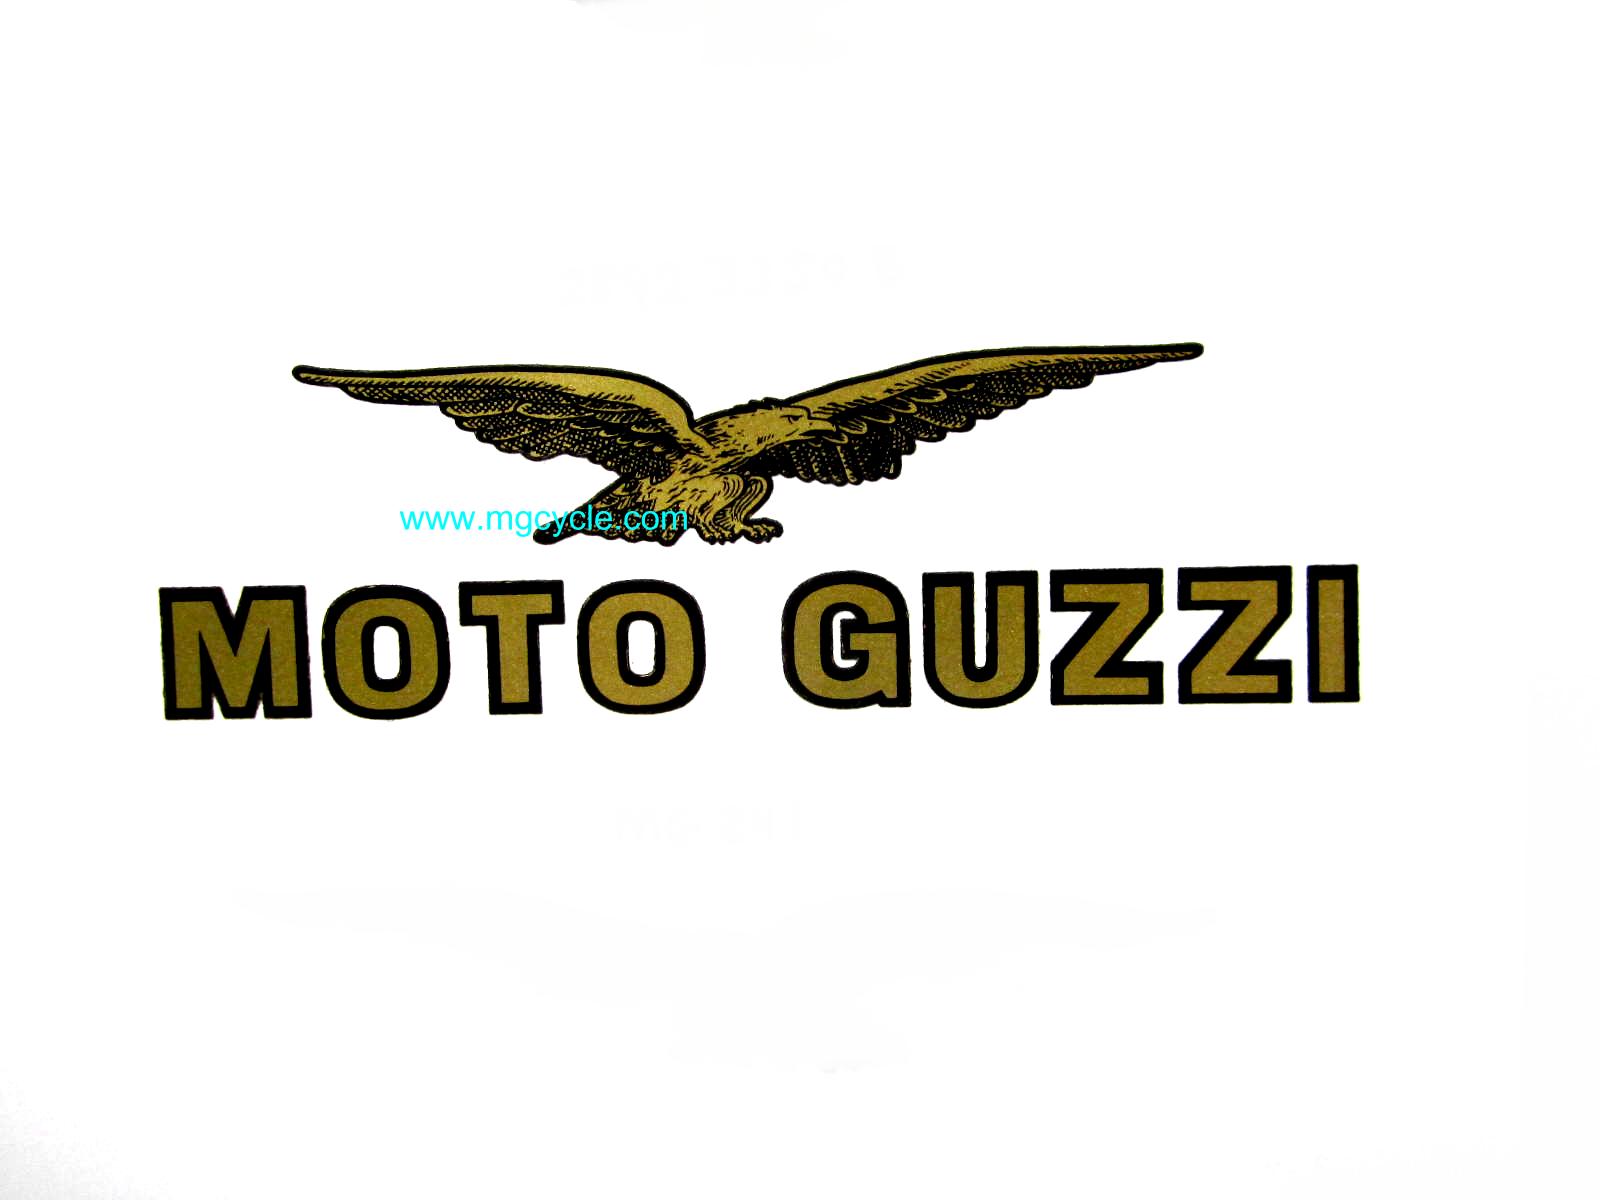 Fairing decal 850 LeMansIII Imola V50 Monza, eagle faces right